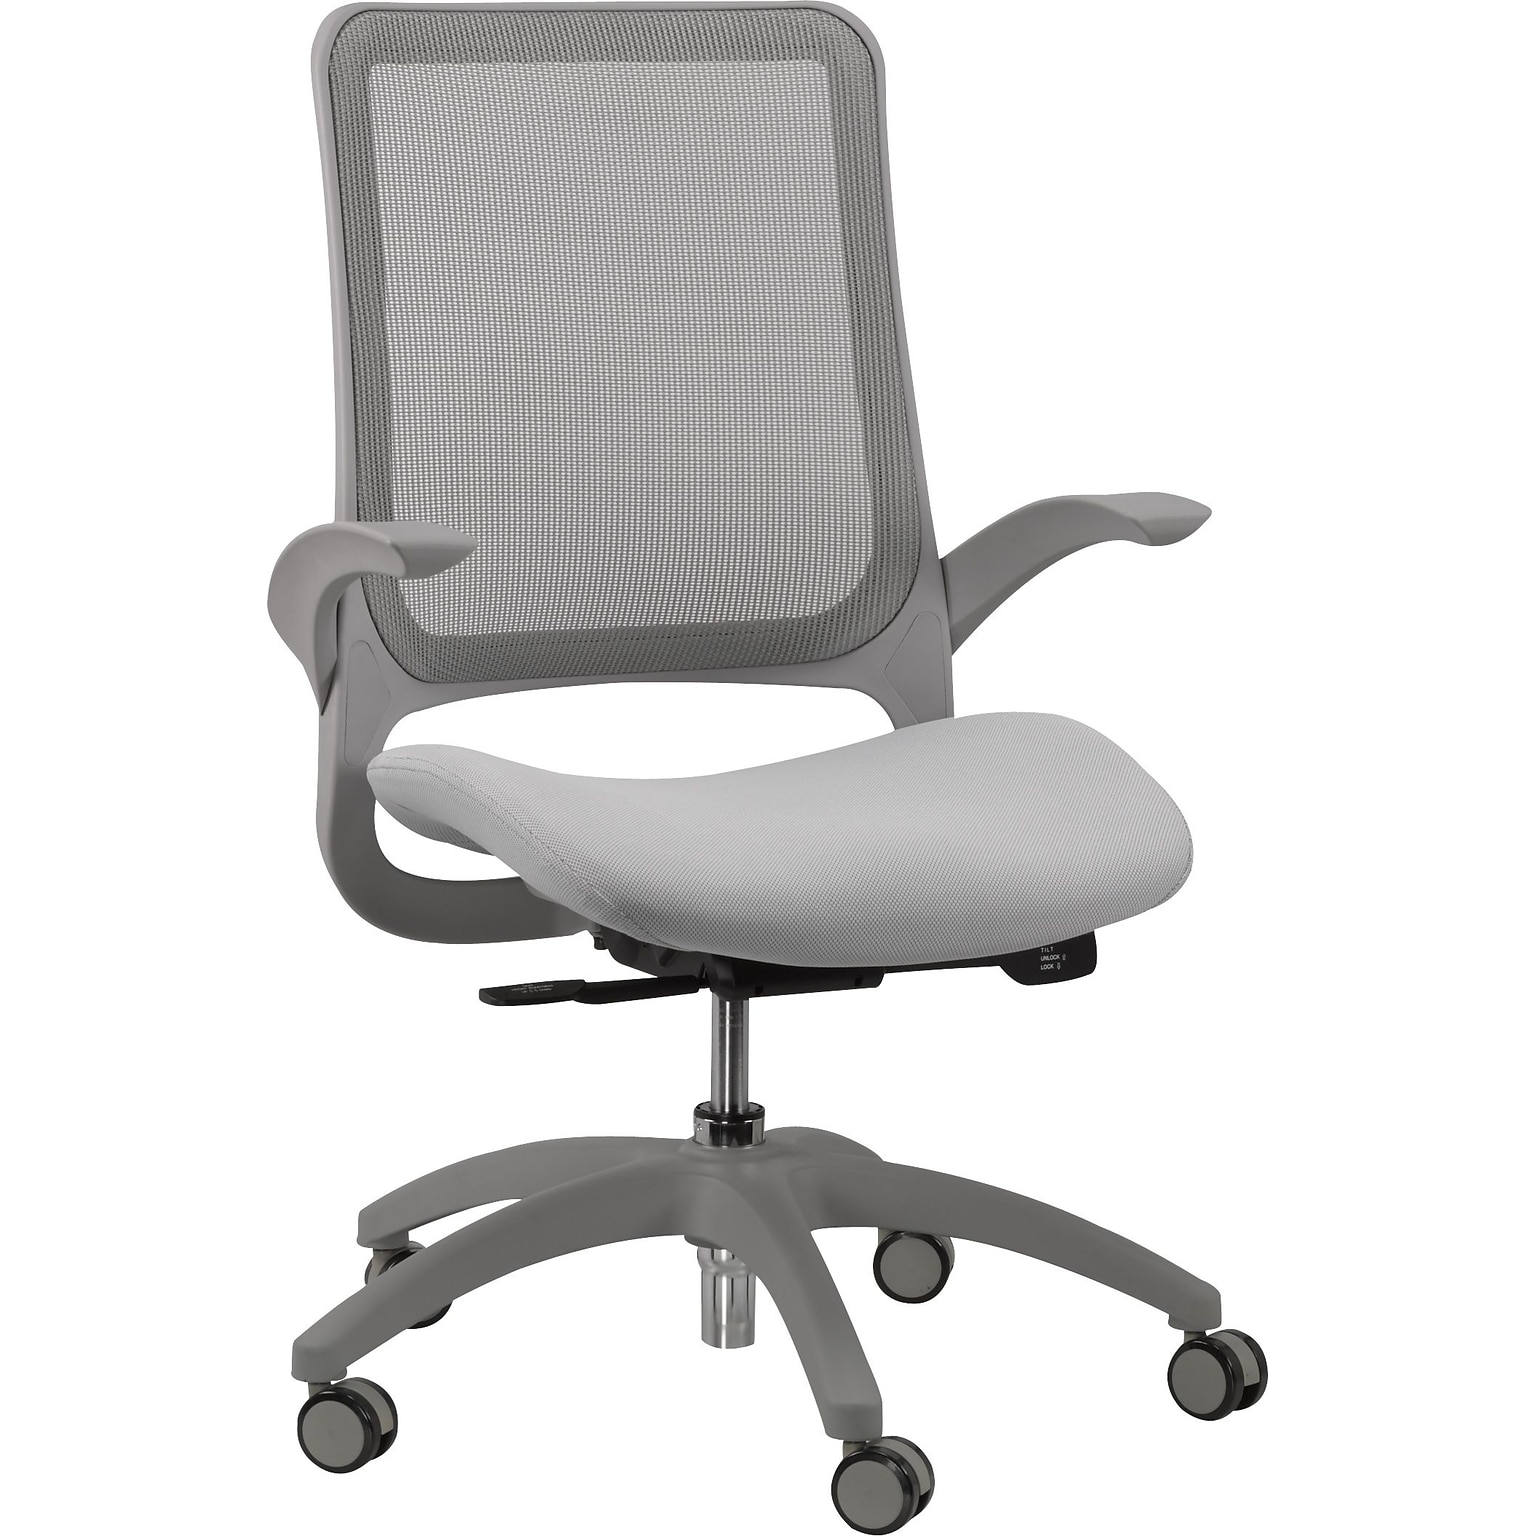 Raynor Hawk MF22 Task Chair, Mesh/Fabric, Gray, Seat: 19 3/10W x 18 1/2D, Back: 17 3/10W x 20 9/10H